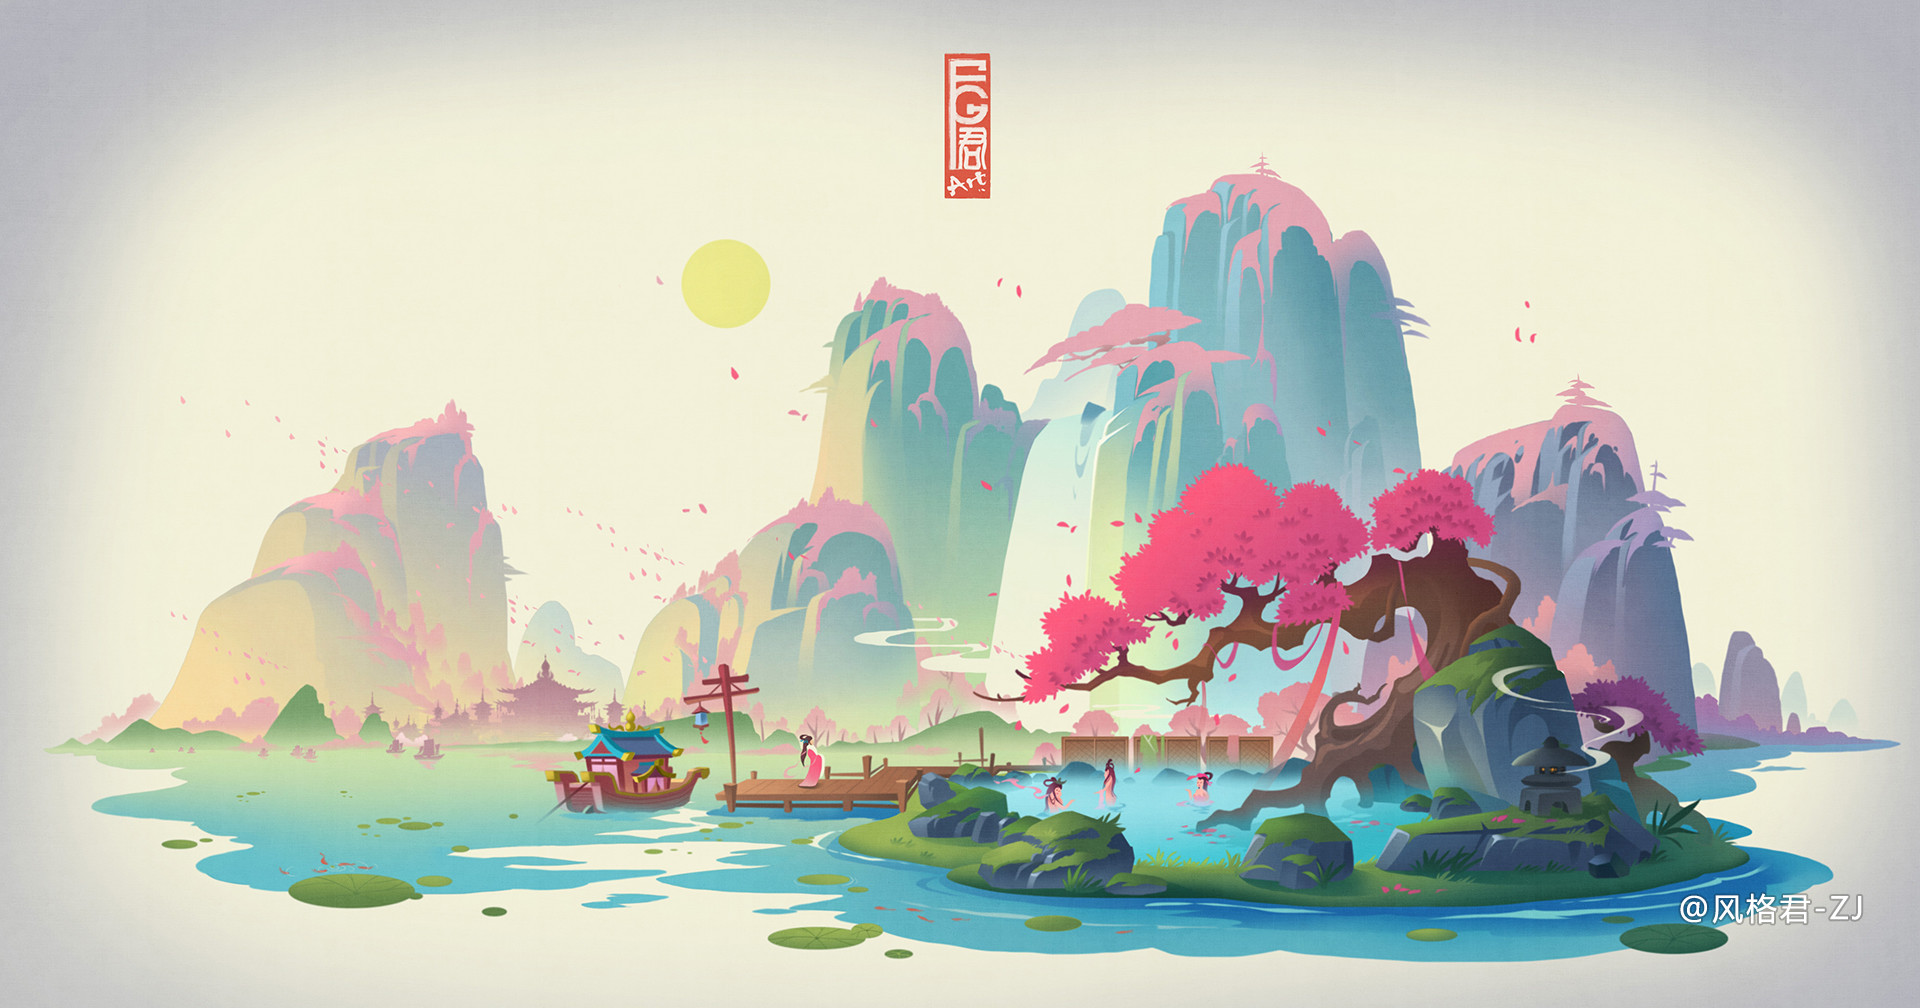 Jun Zhang, Asian architecture, white background, digital art, cherry blossom, hot spring, mountains, boatx1008 Wallpaper